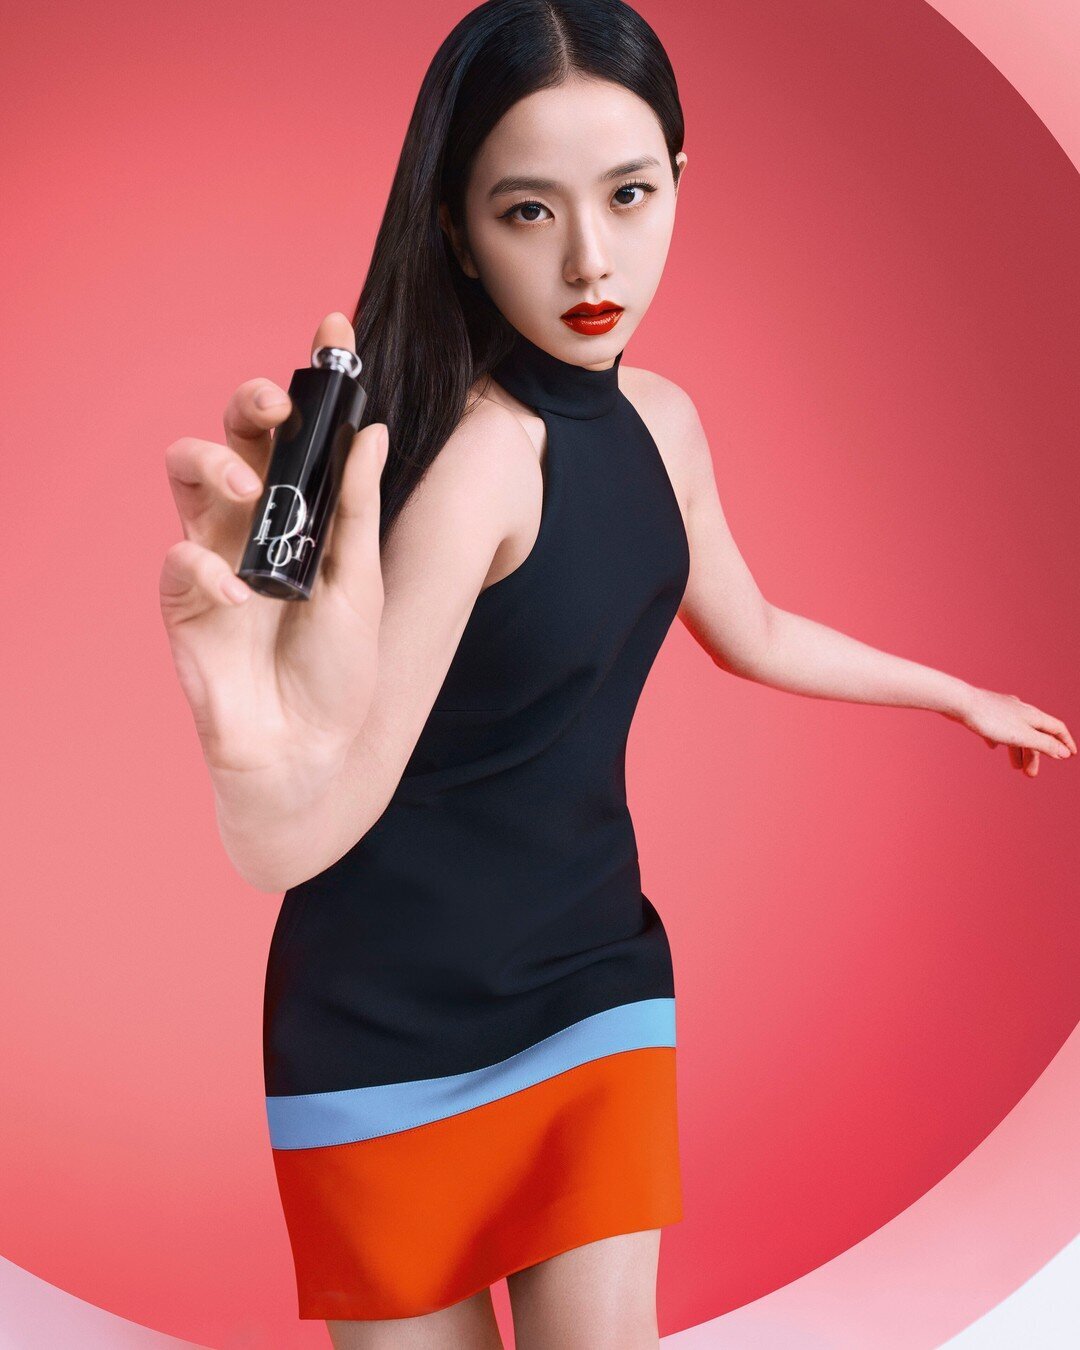 Dior Addict Lipstick Campaign Ft BLACKPINK Jisoo  Hypebae